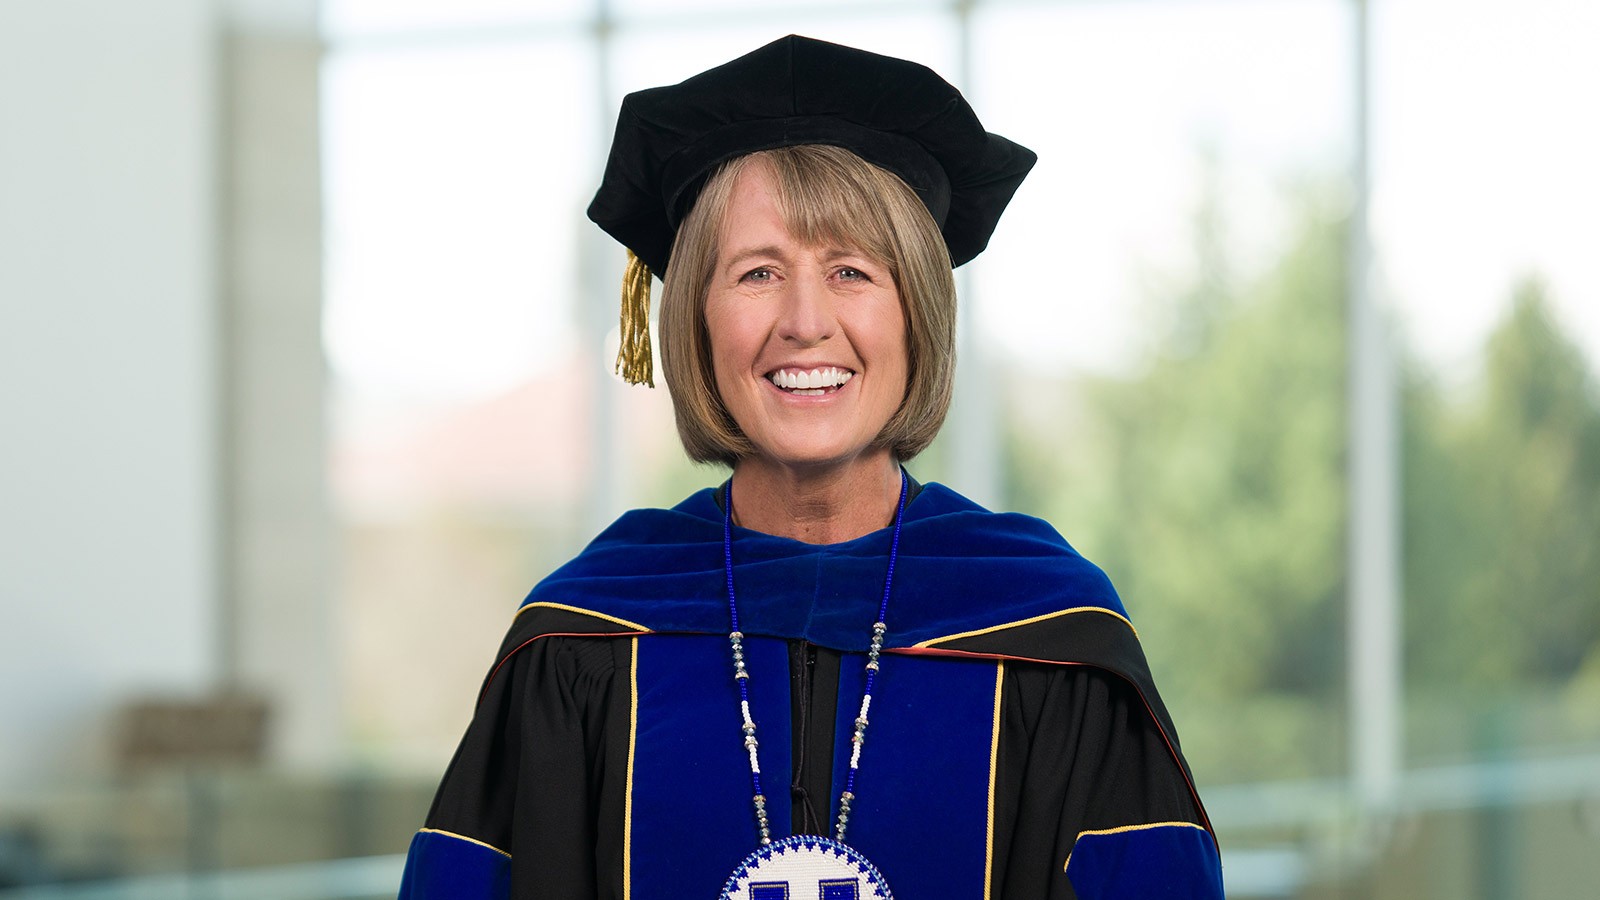 USU President Noelle Cockett praised the class of 2021 in her commencement speech.